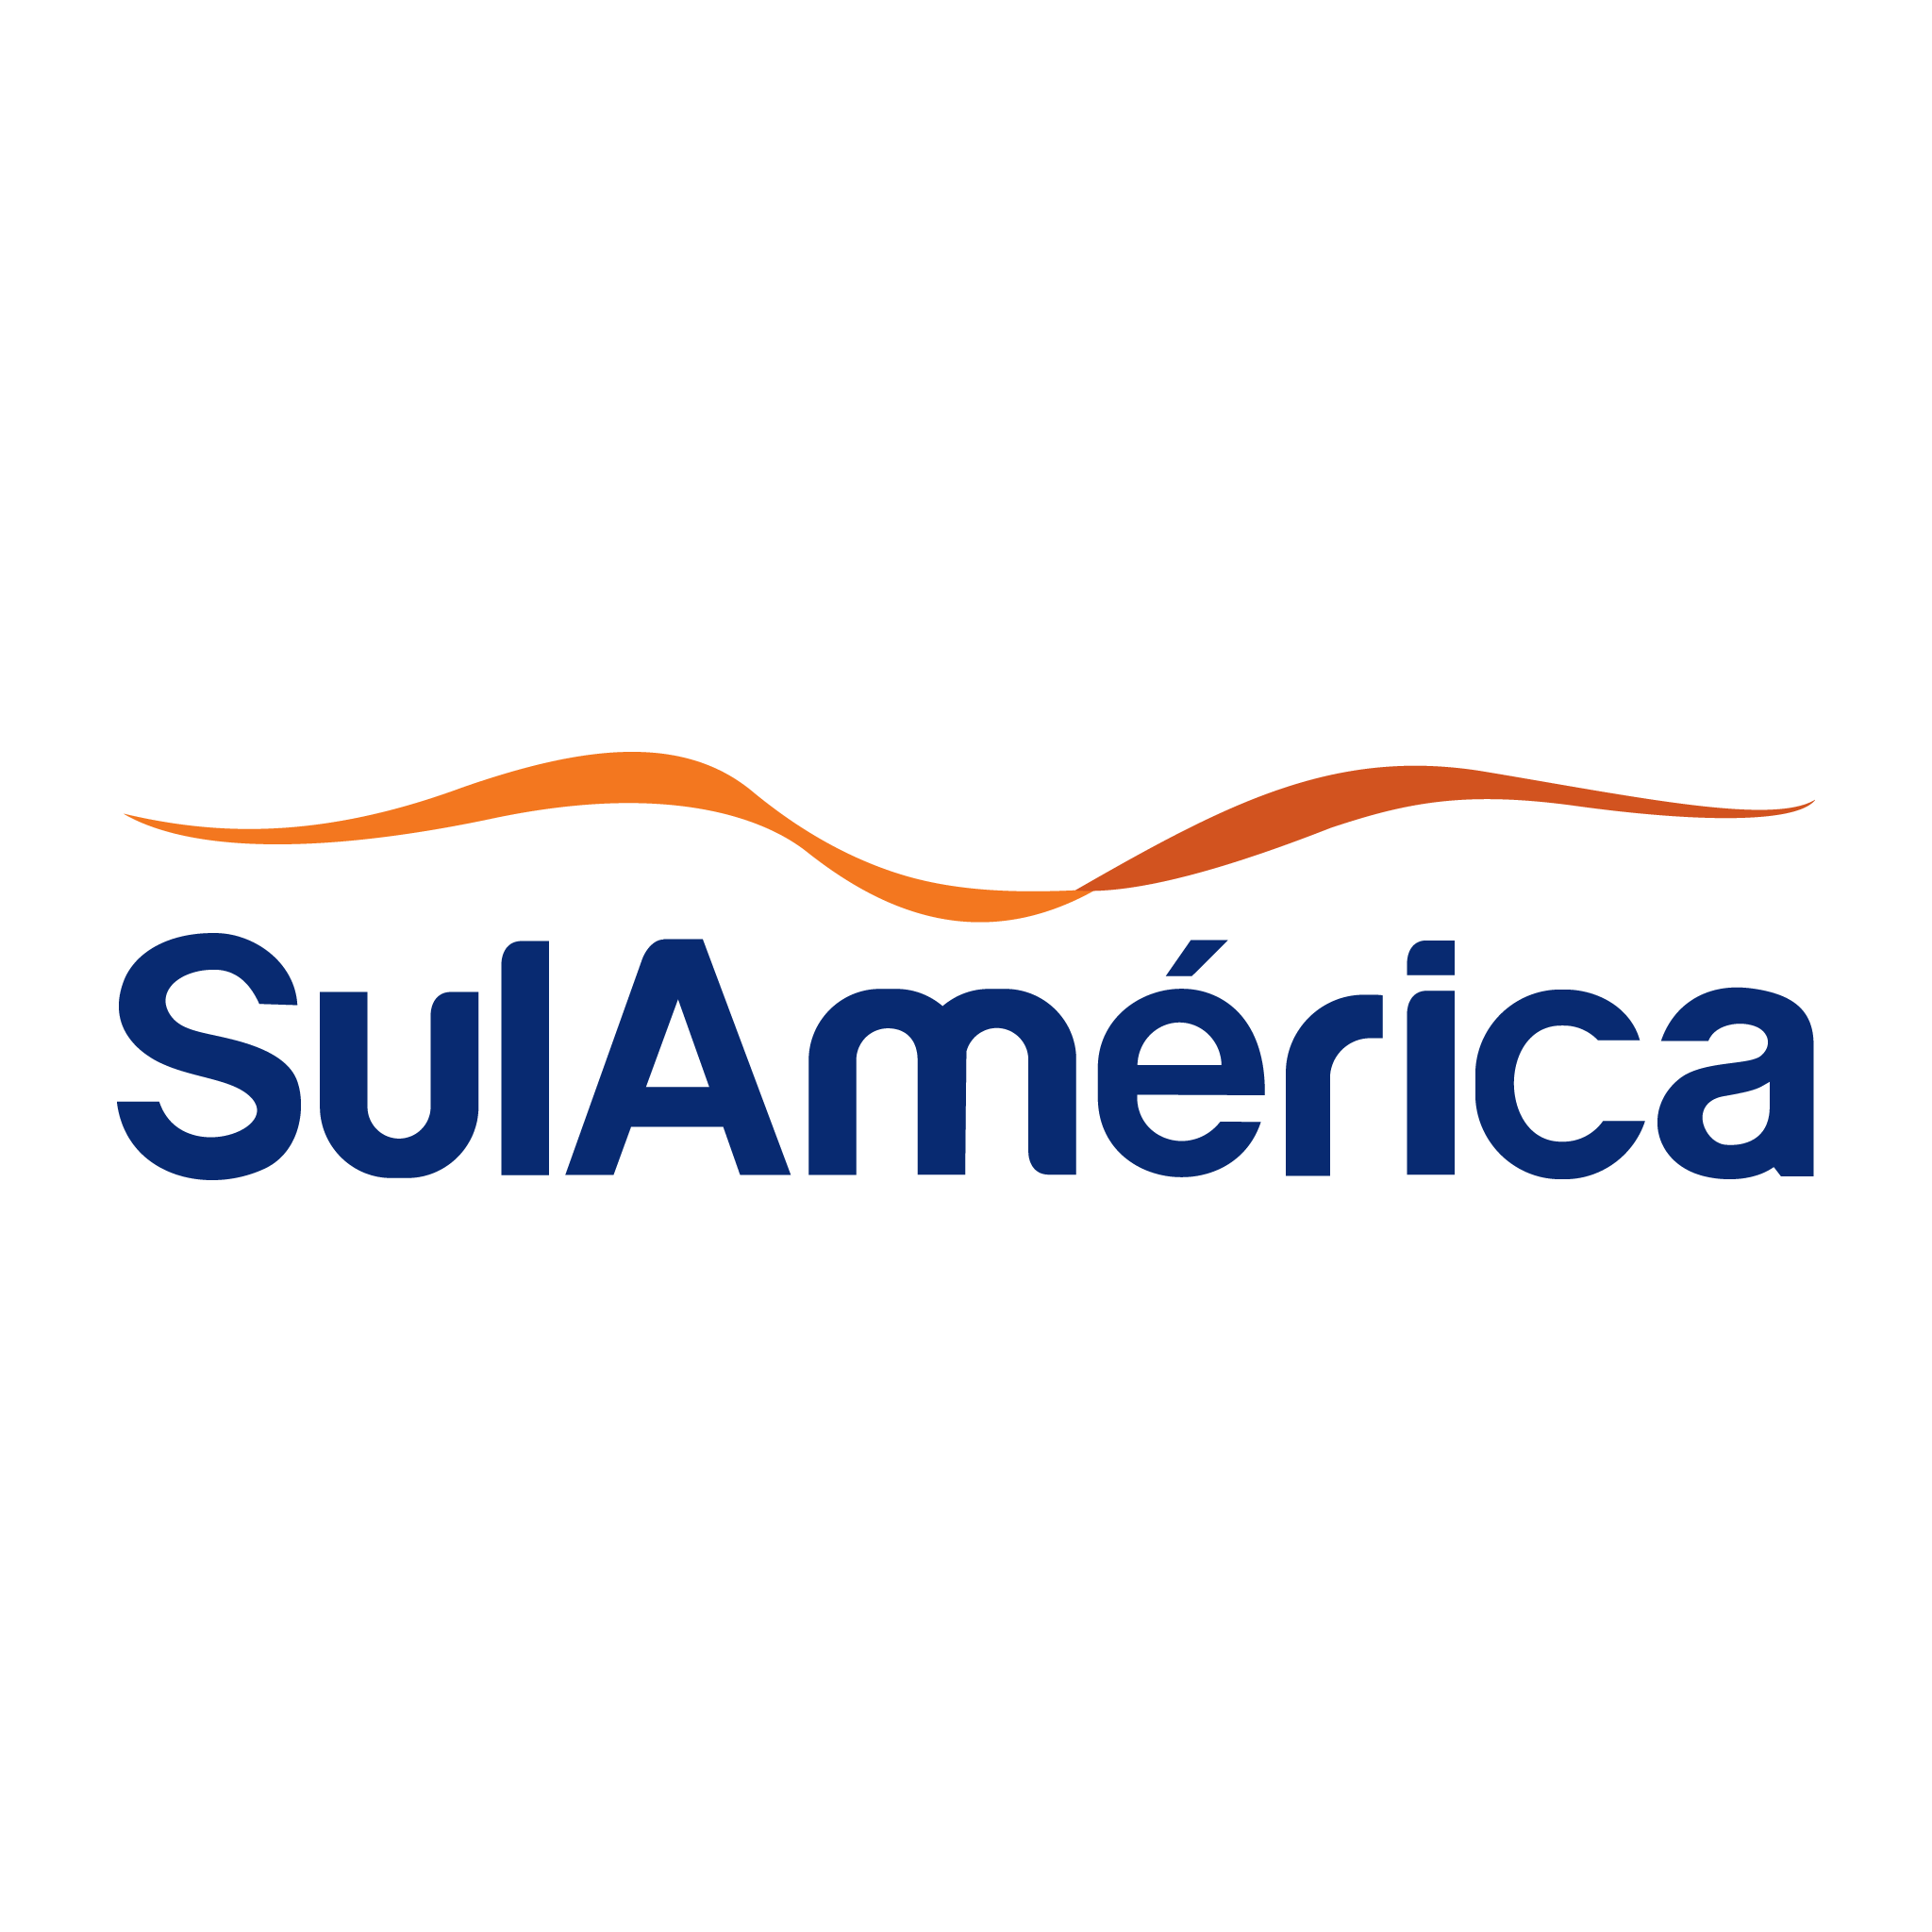 logo sulamerica